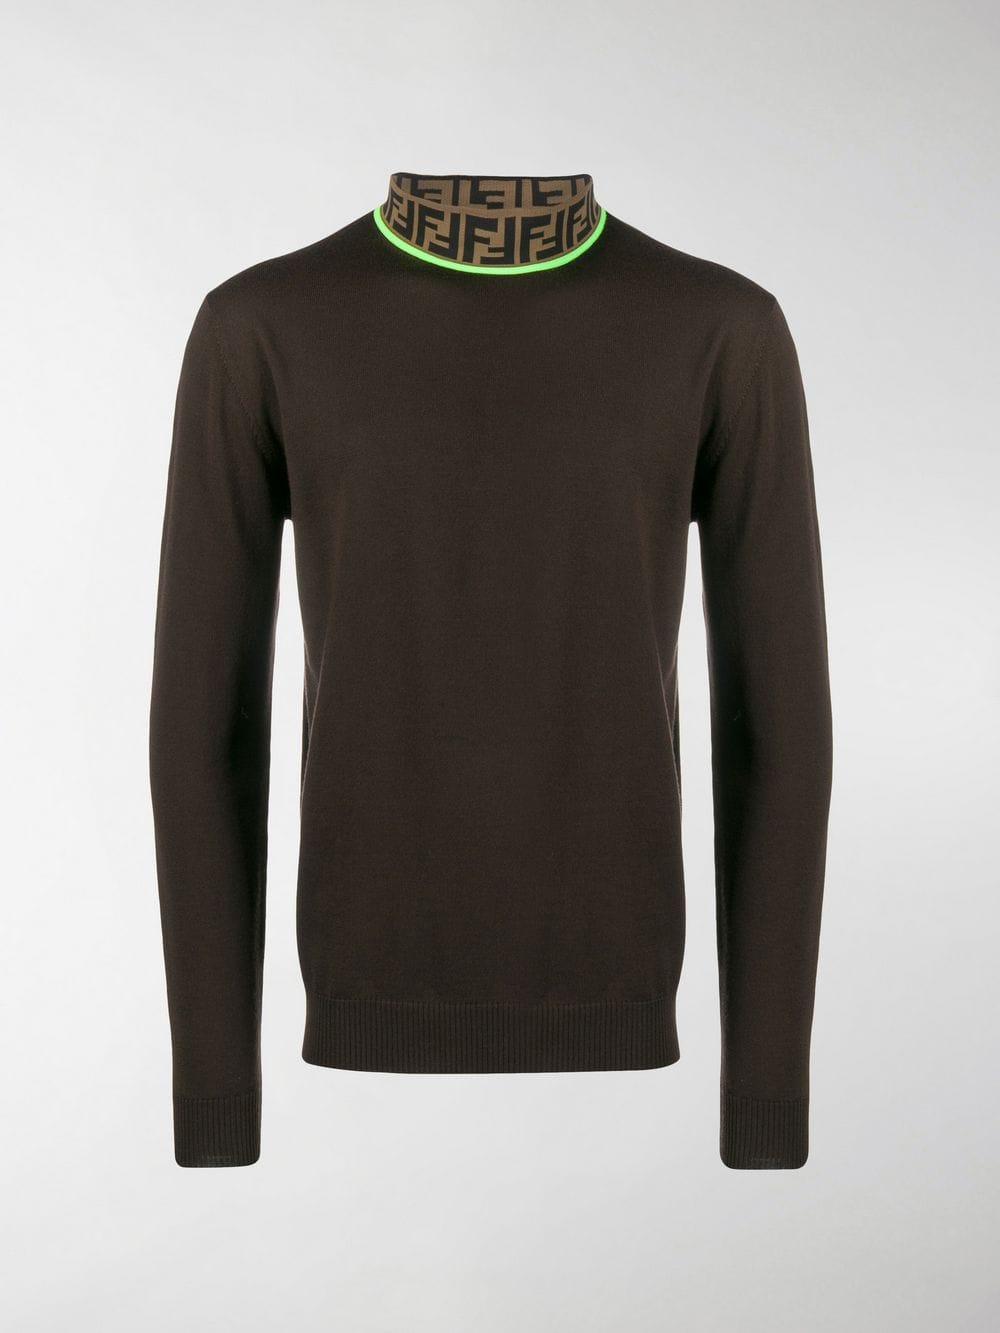 Fendi Ff Monogram Turtleneck Sweater Brown/green for Men - Lyst